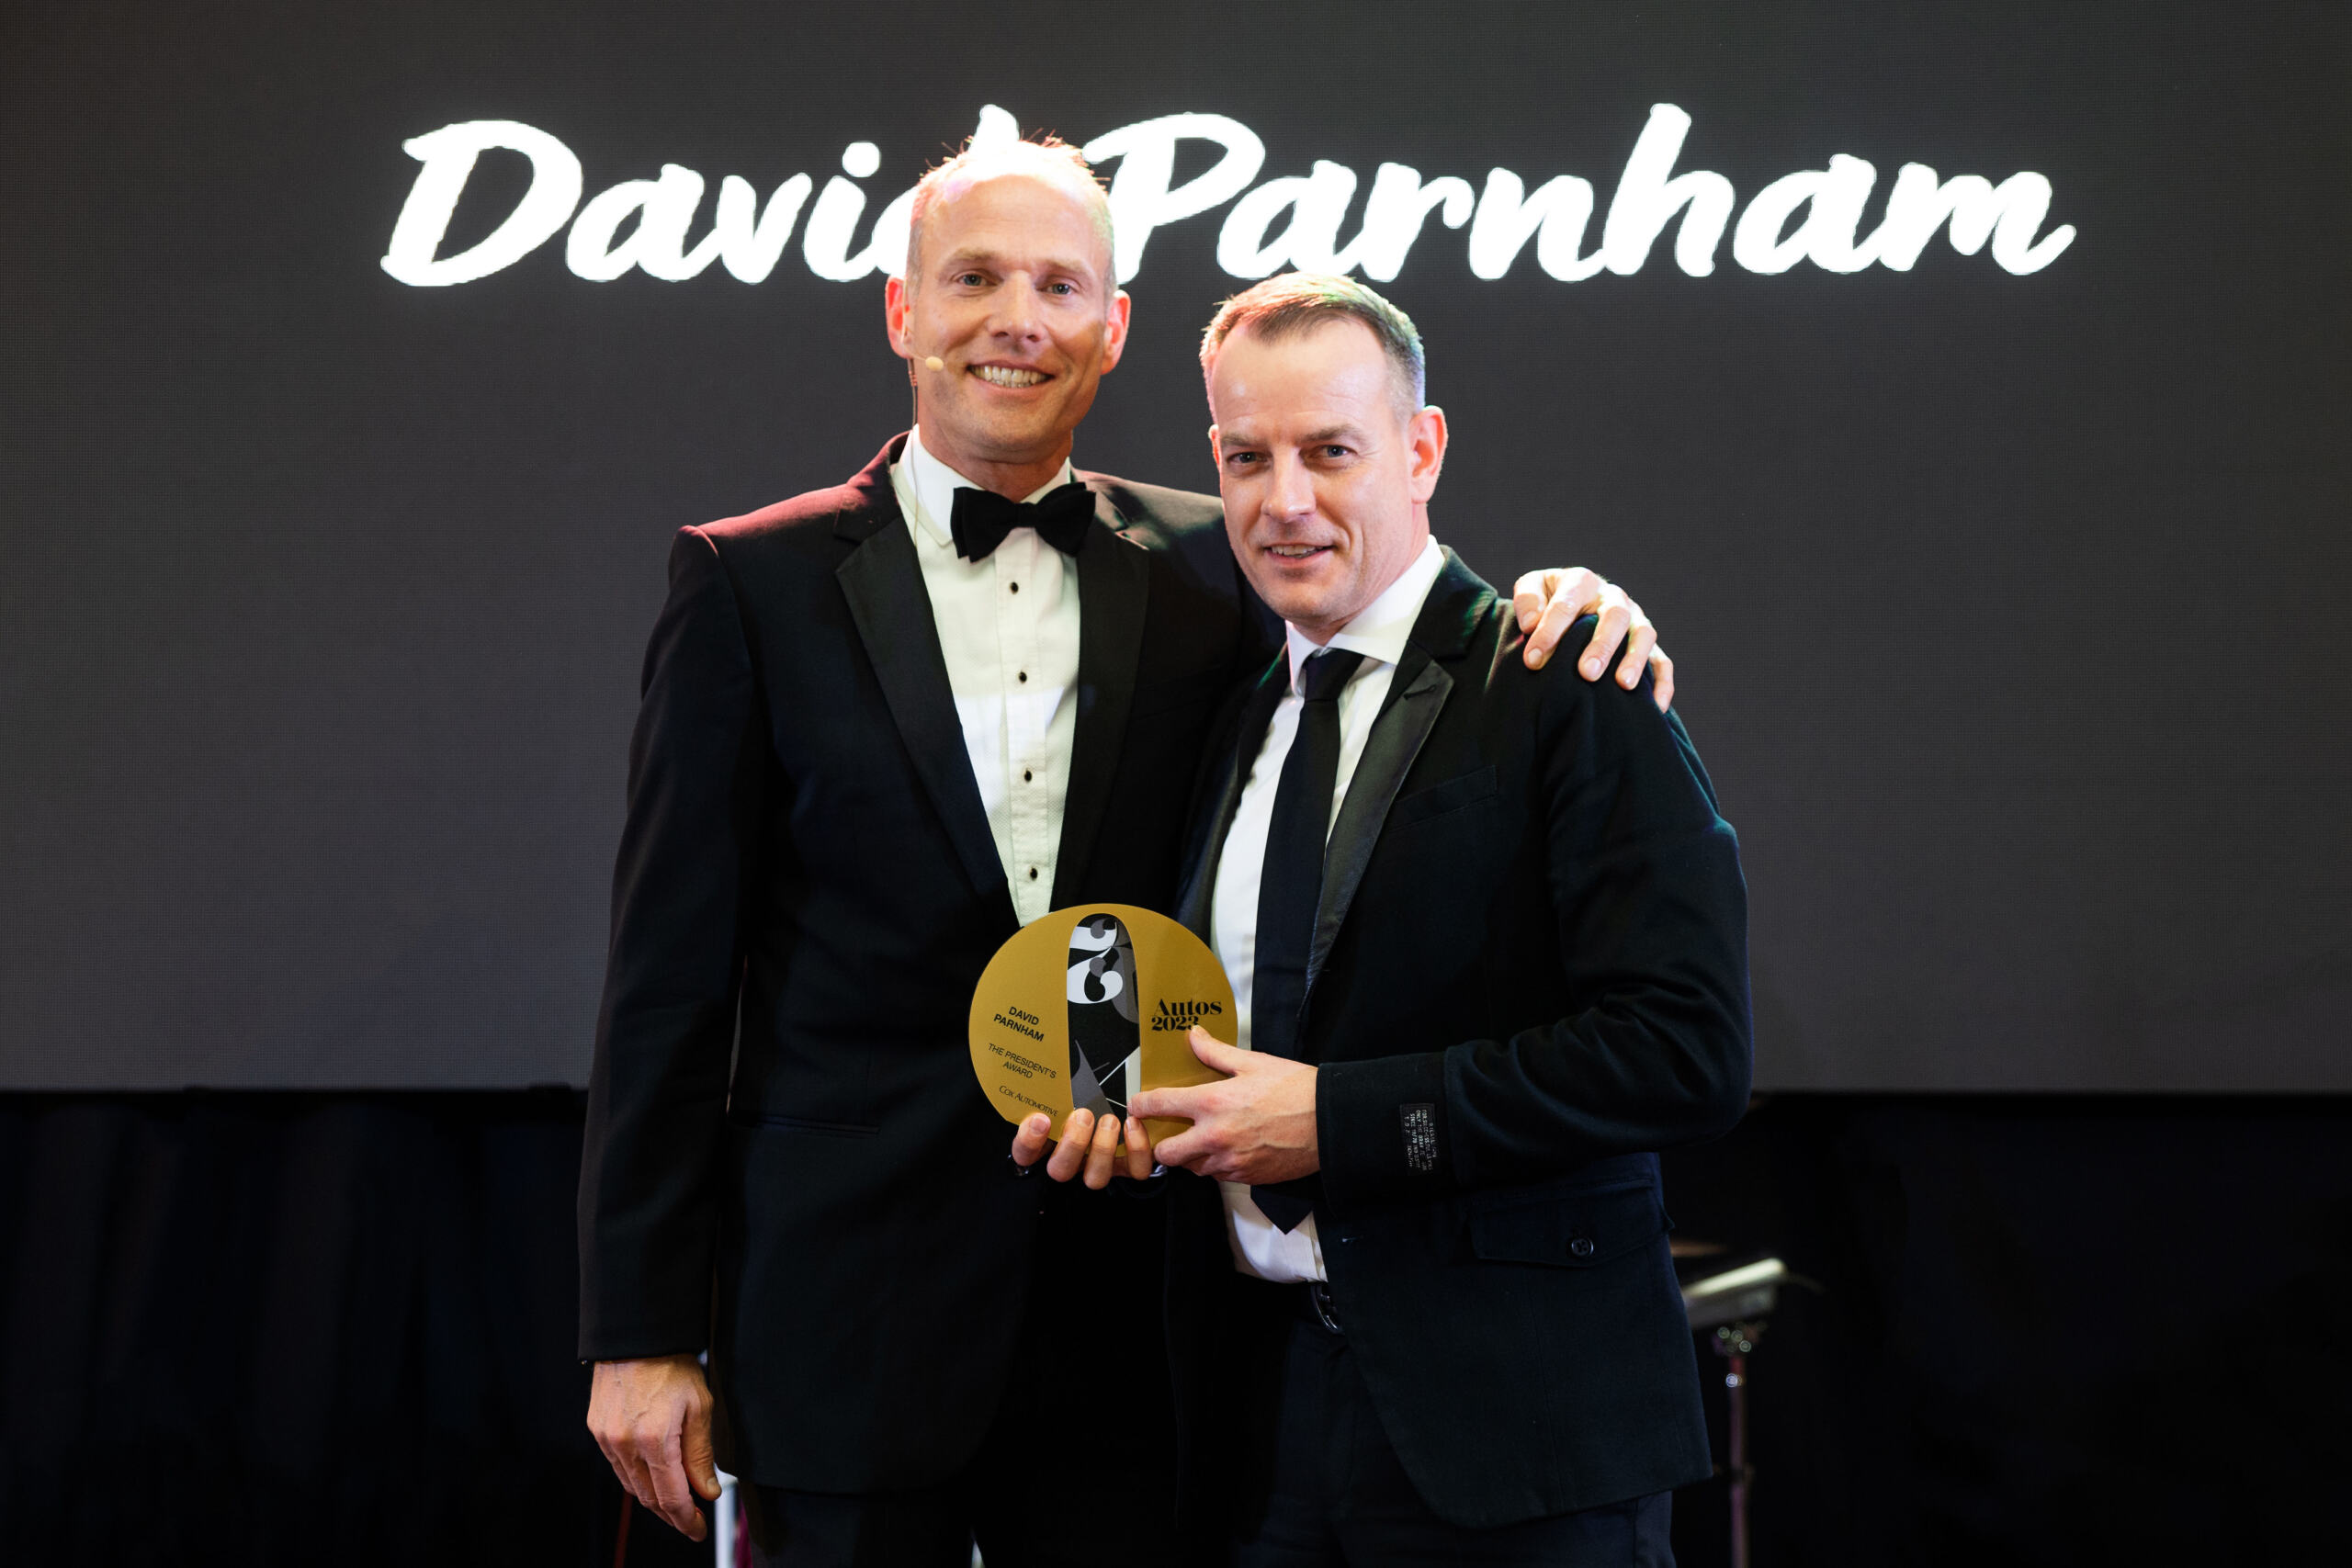 Dedication, improvement, succession - David Parnham on making your mark at Cox Automotive